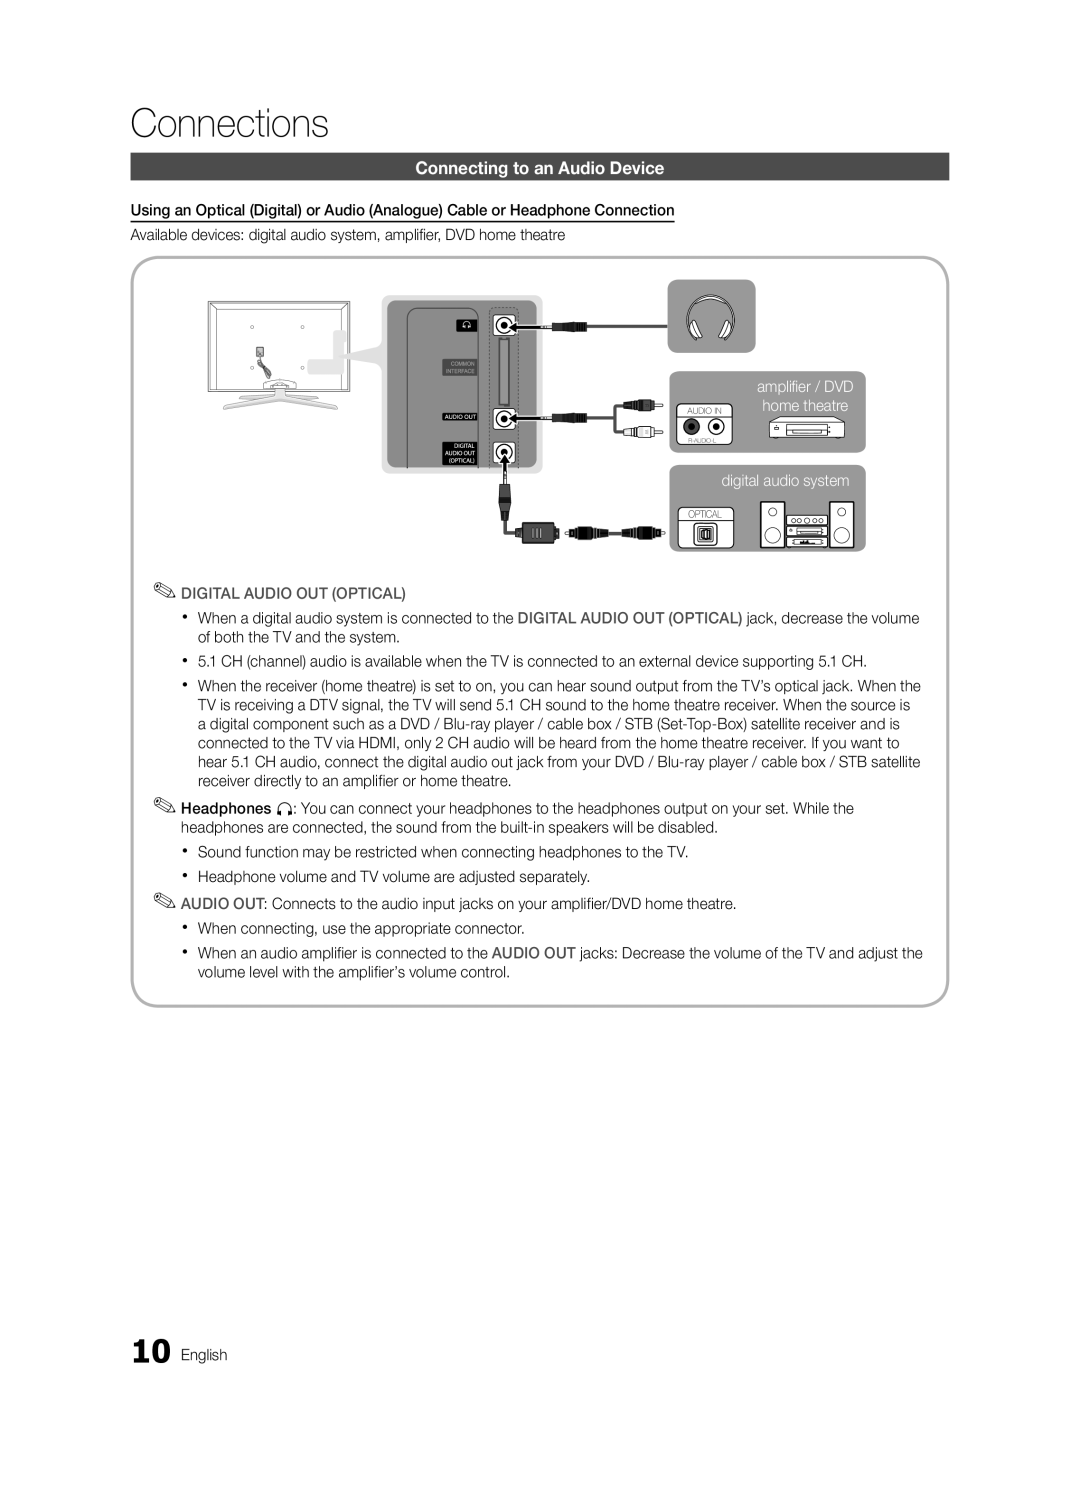 Samsung UE40C7000WKXXU, UE46C7000WKXXU manual Connecting to an Audio Device, Digital Audio OUT Optical 